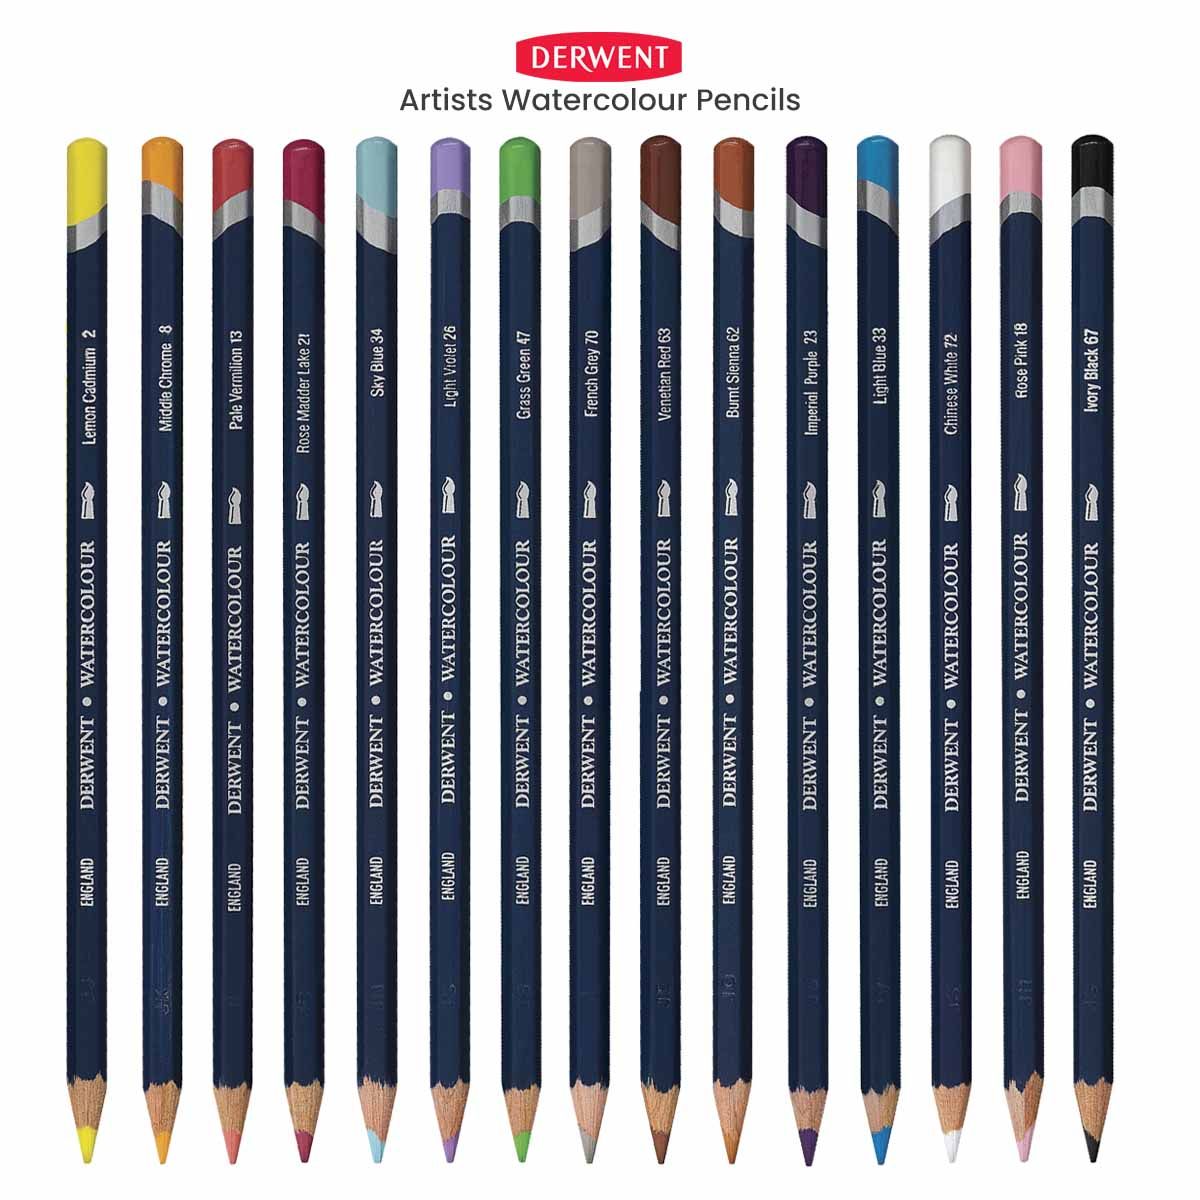 Derwent Artists Watercolour Pencils